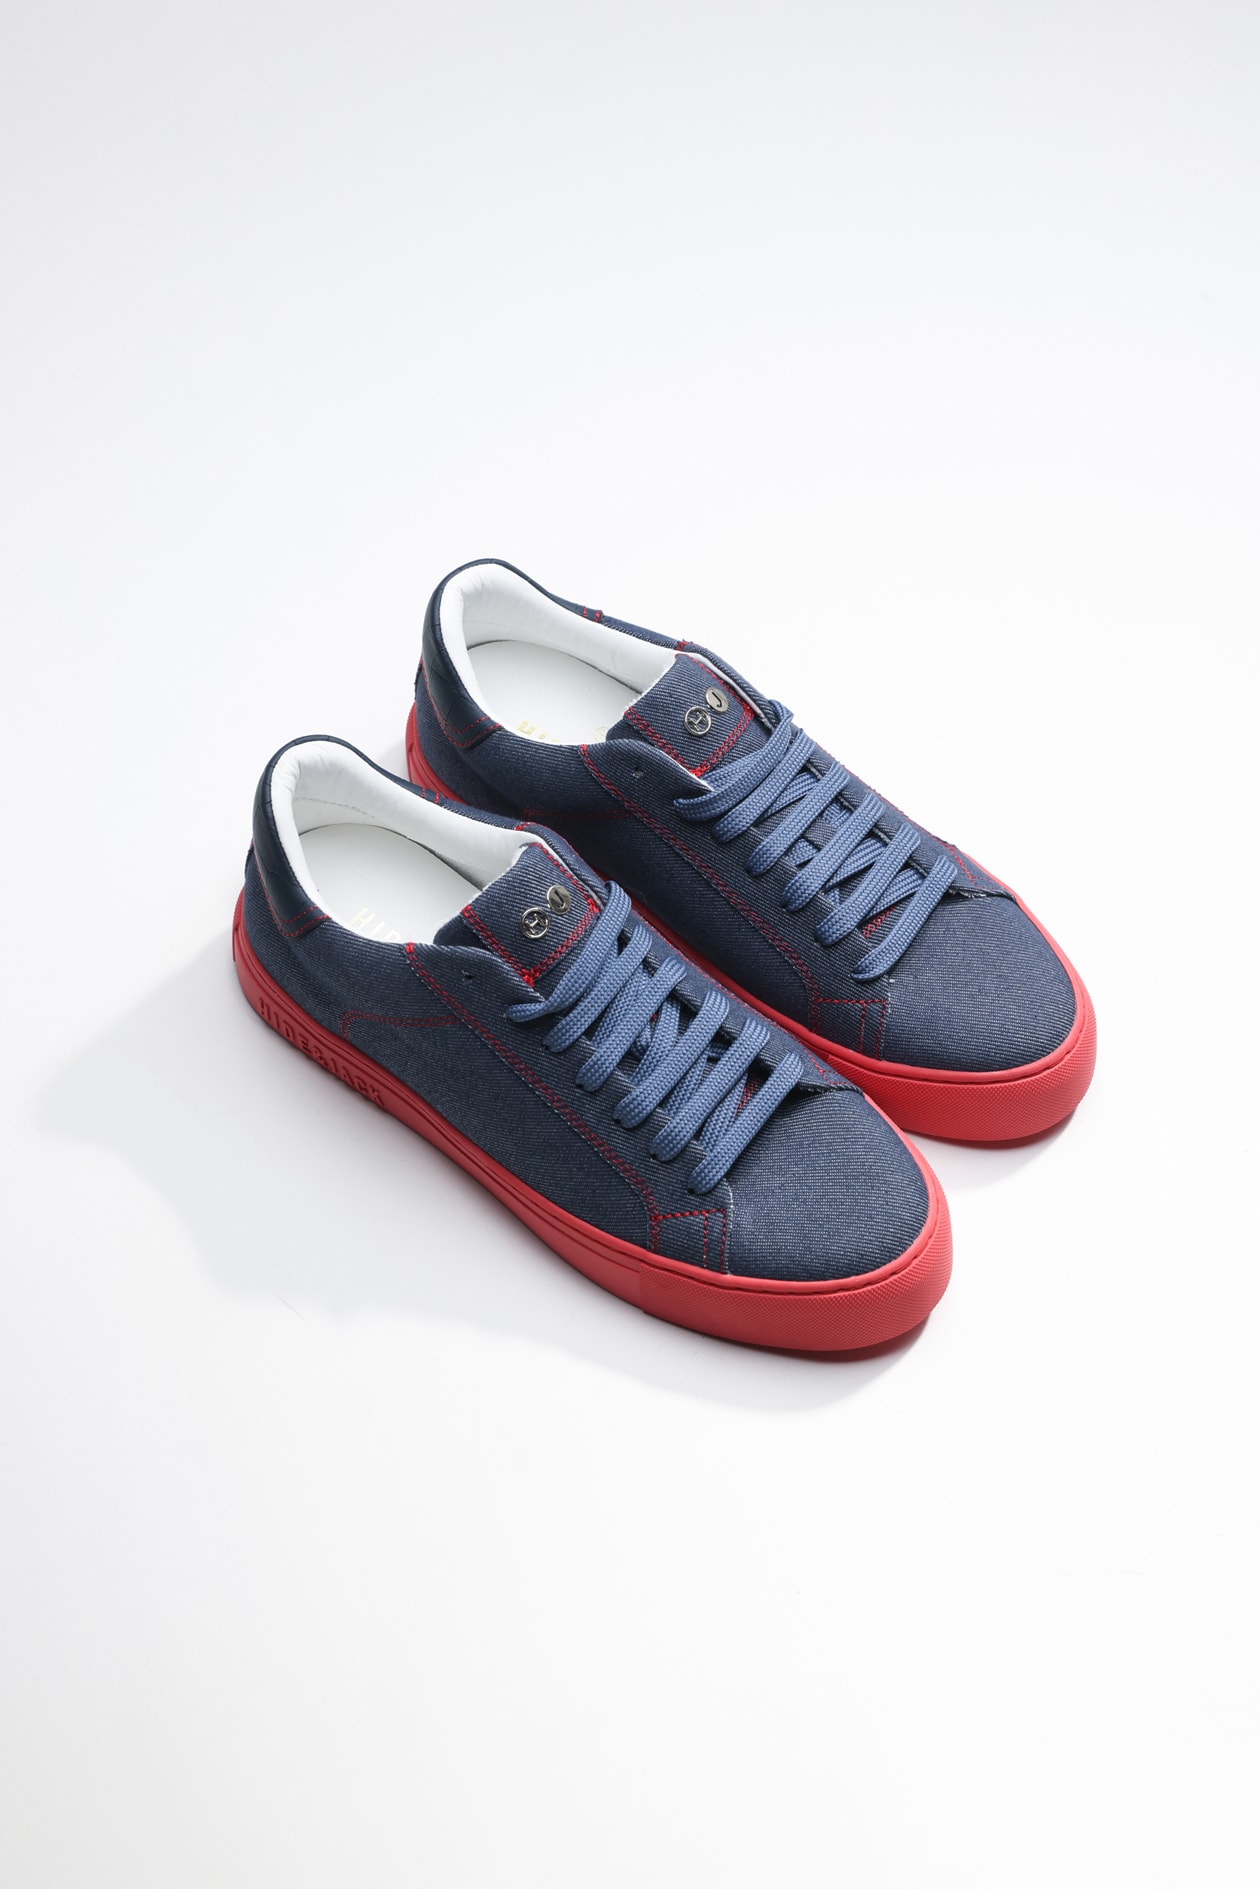 Hide&amp;jack Low Top Sneaker - Essence Denim Blue Red In White